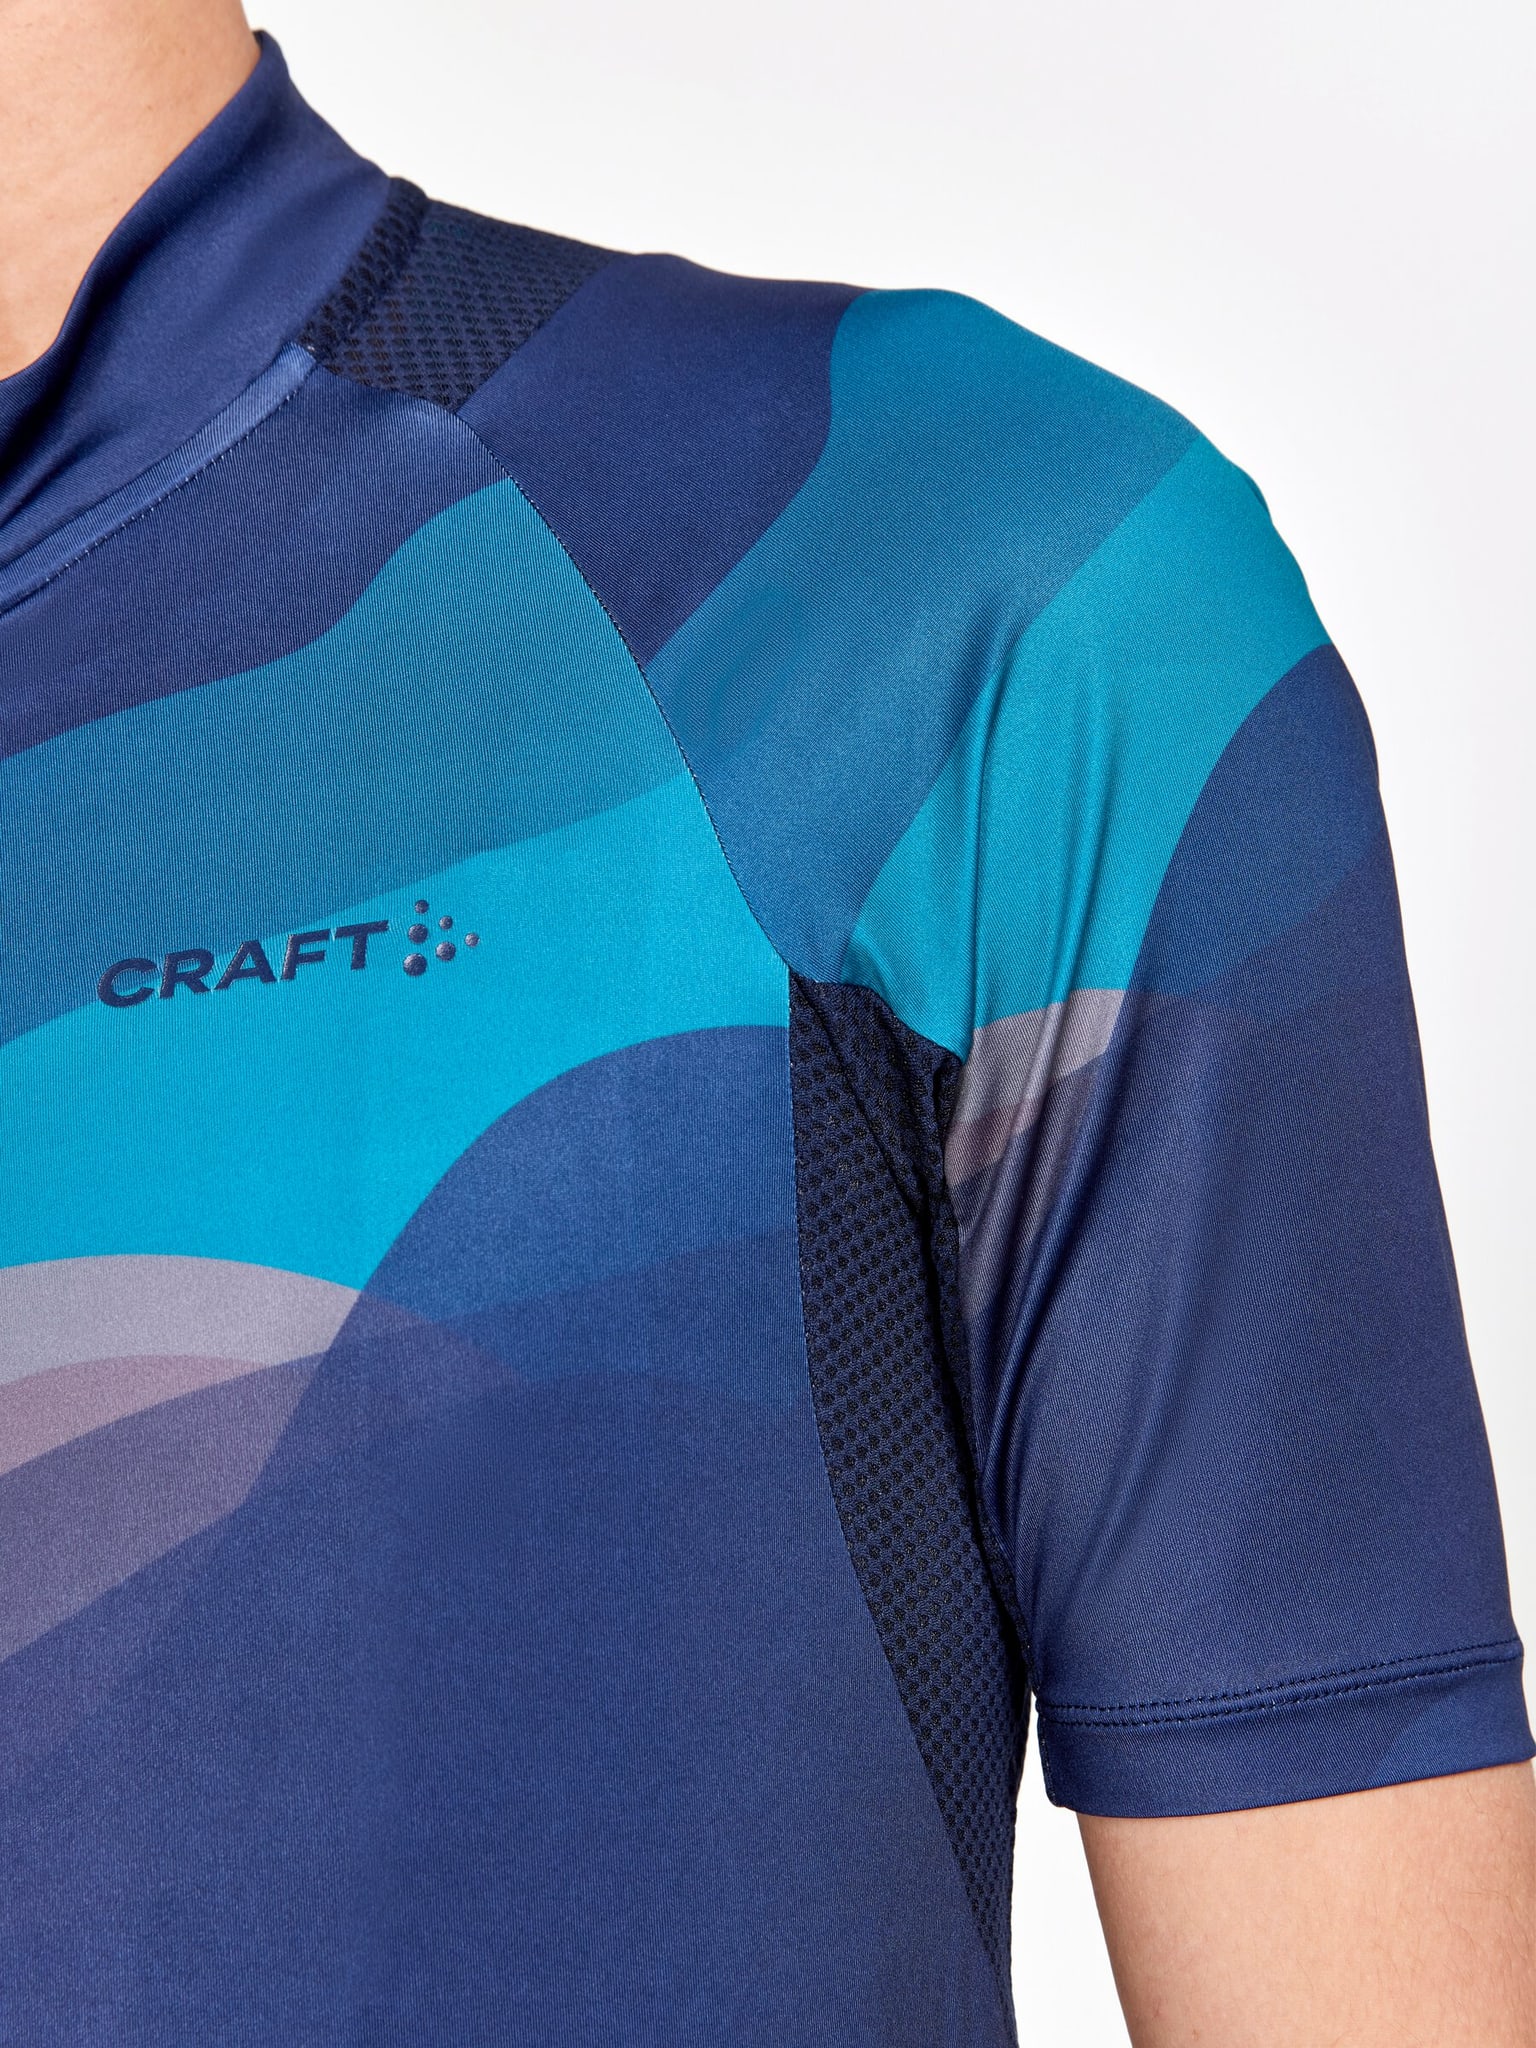 Craft Craft Adv Endur Graphic Jersey Bikeshirt bleu-marine 4